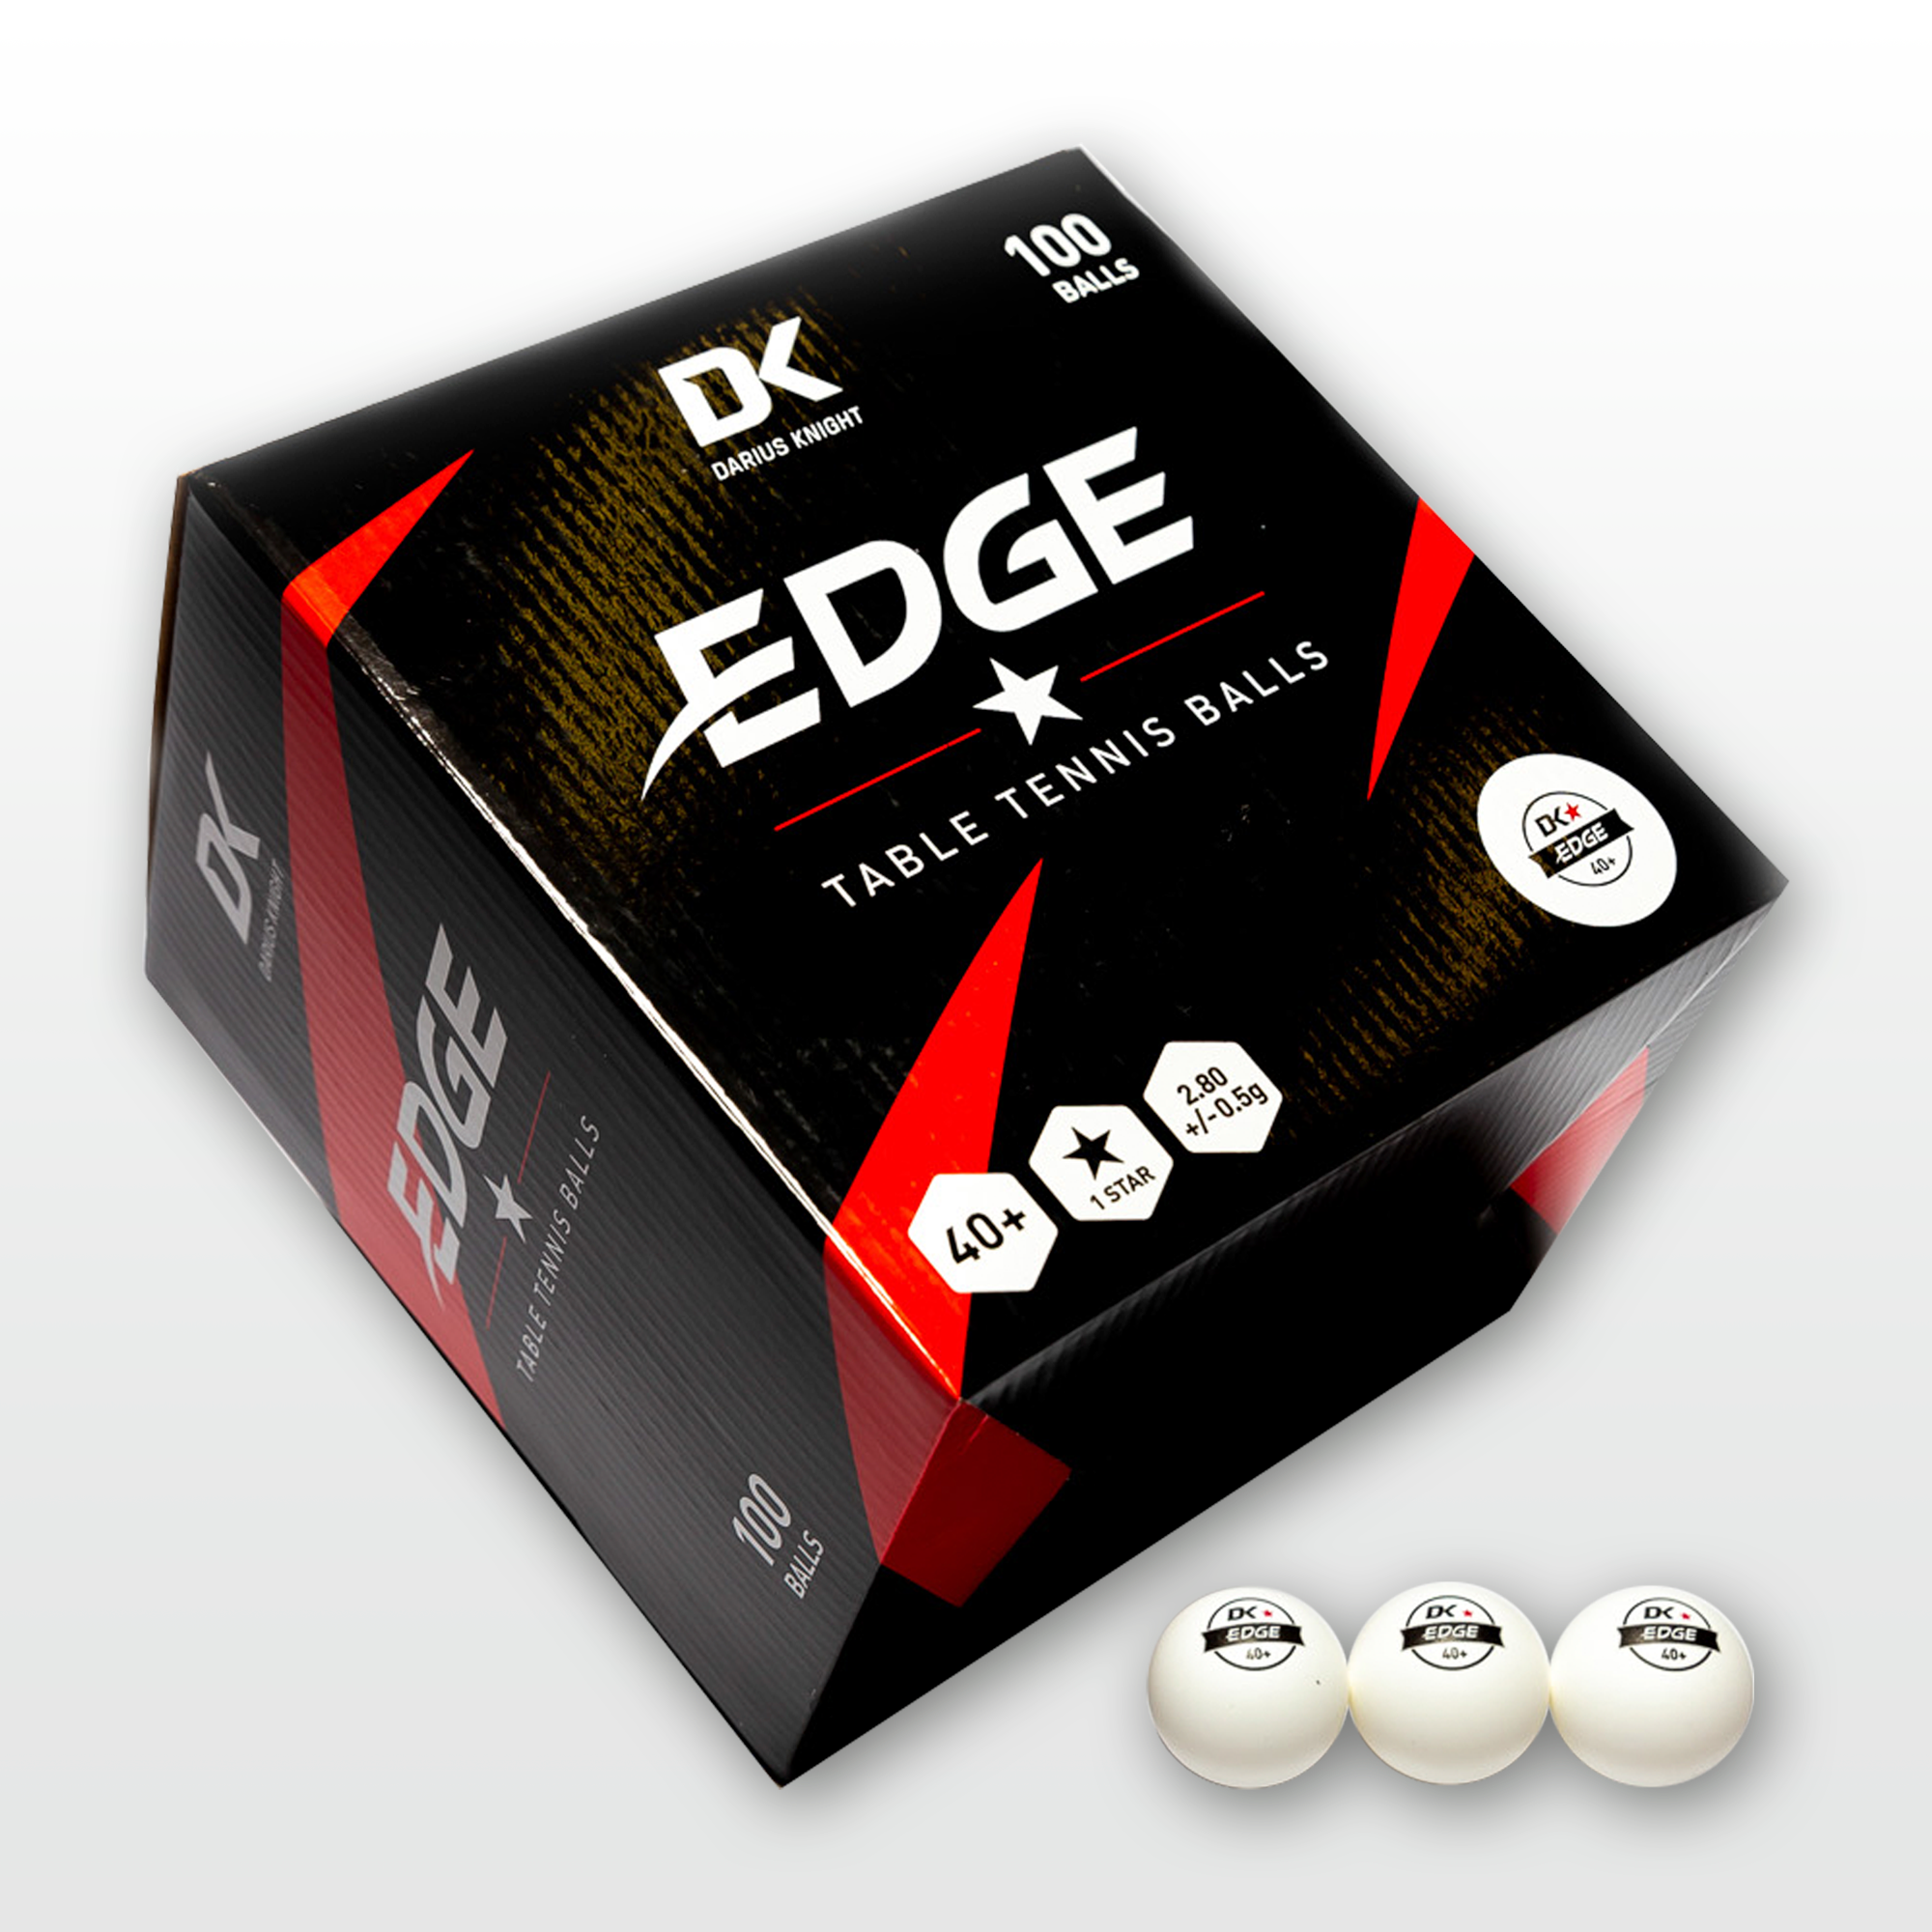 DK Edge 40+ 1 Star Table Tennis Balls 100 pack - DK Sports